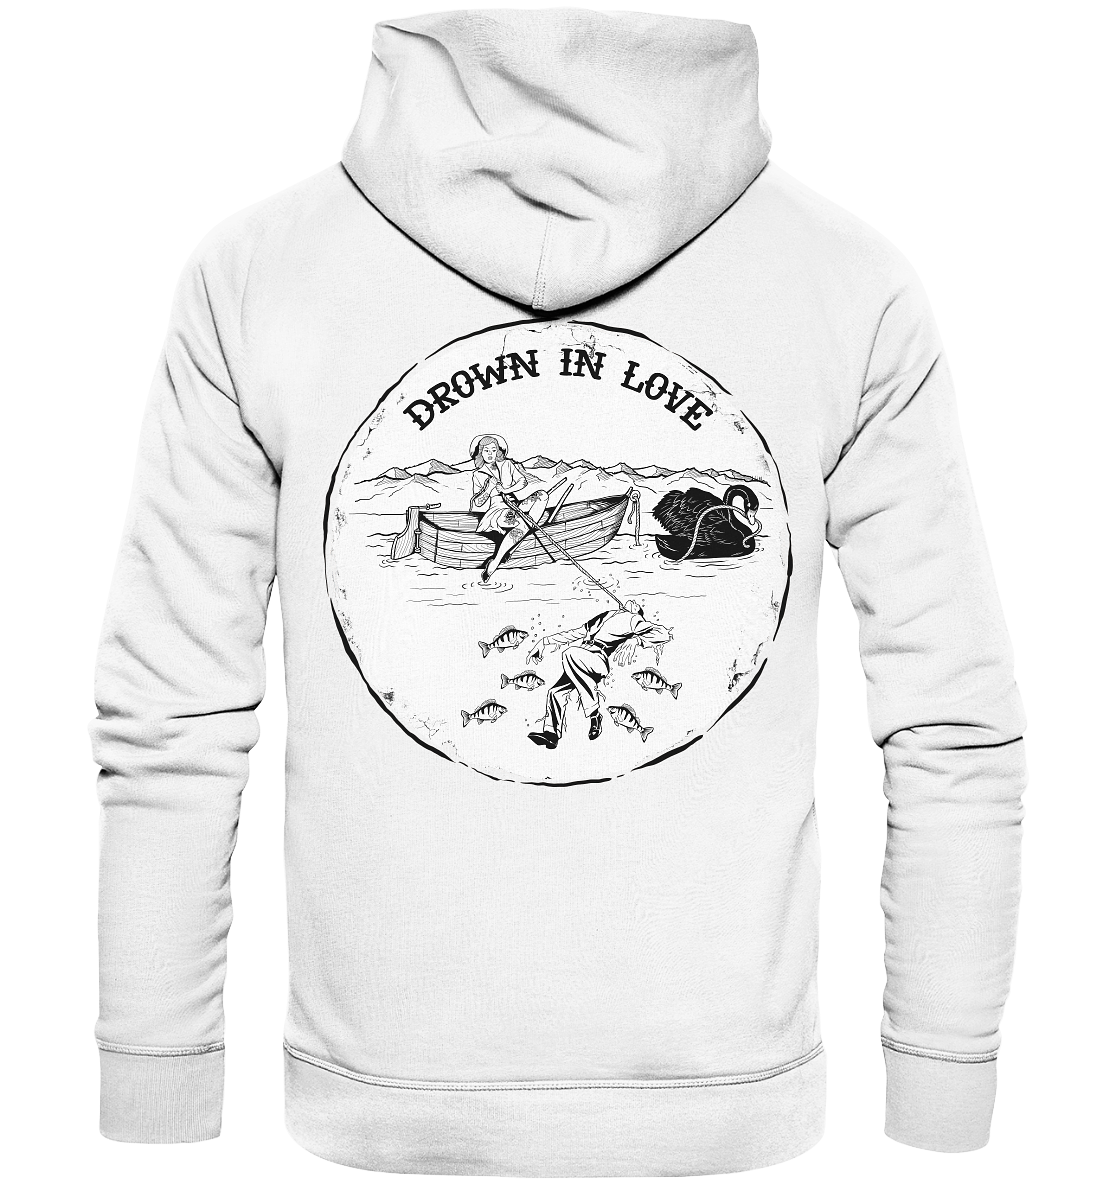 back-organic-fashion-hoodie-f8f8f8-1116x.png